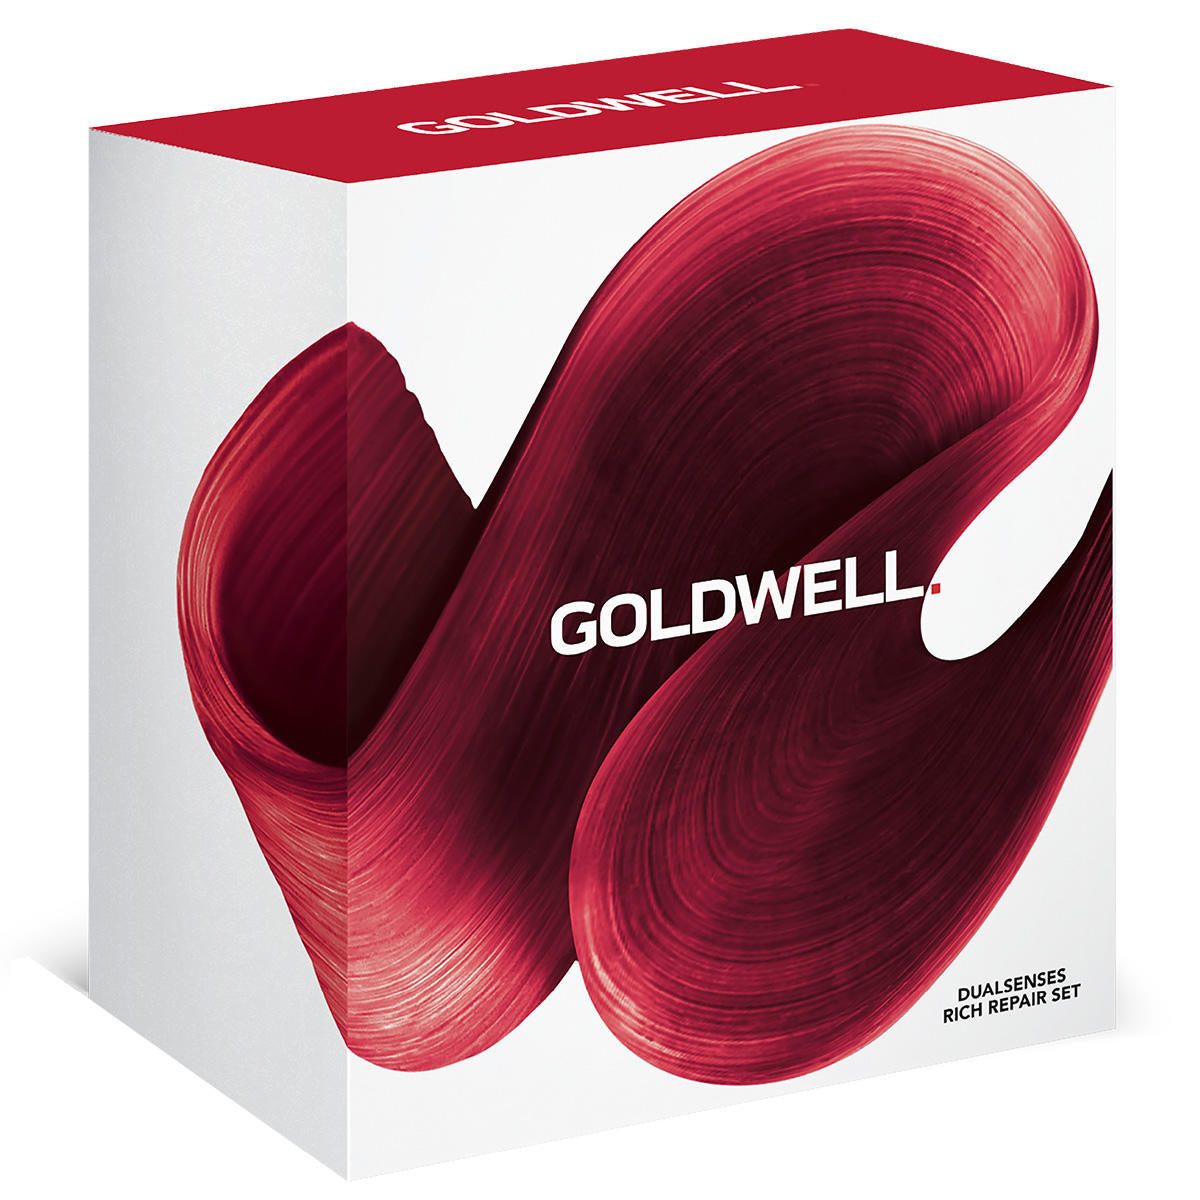 Goldwell Dualsenses Rich Repair Gift set  - 1